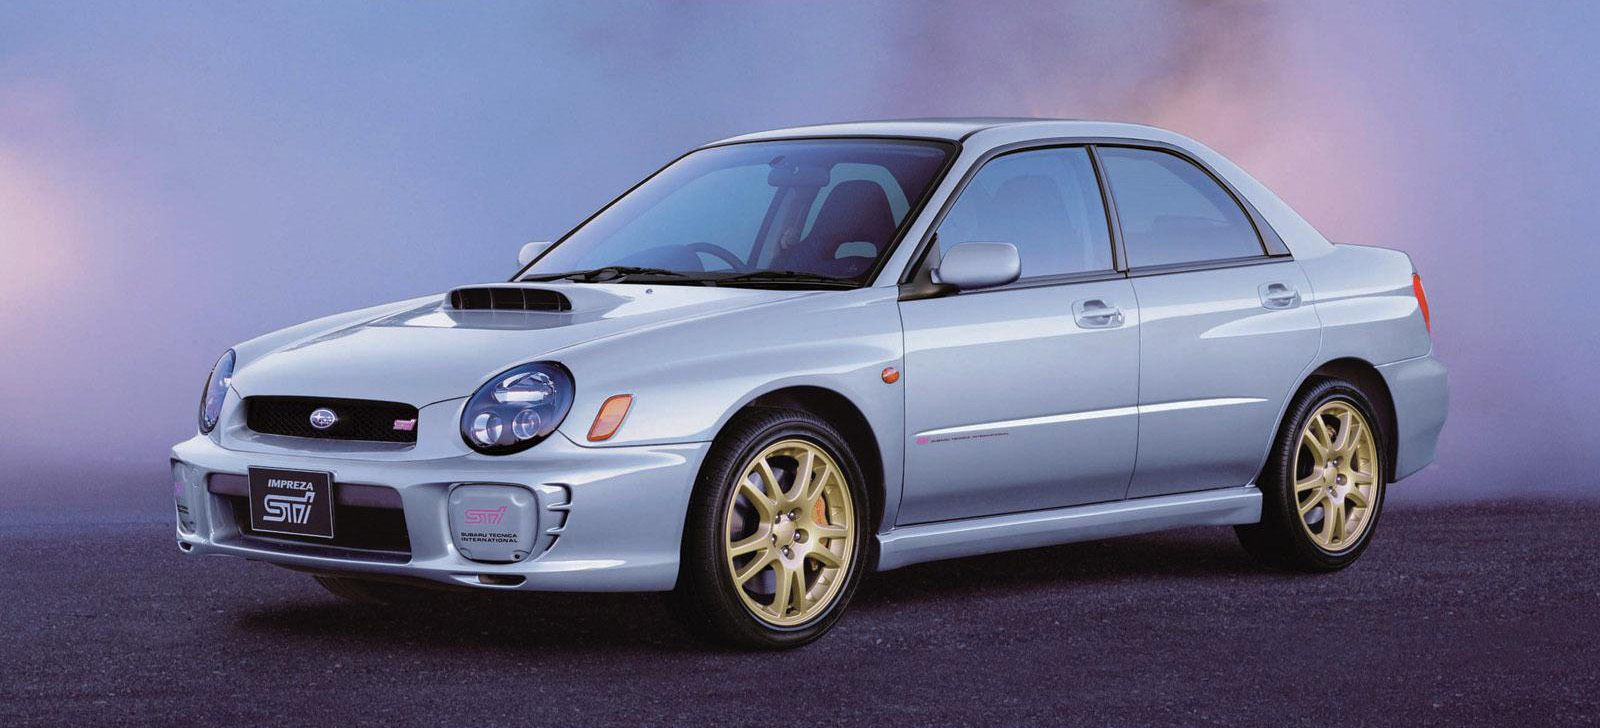 2000 Subaru Impreza Sti (JDM)